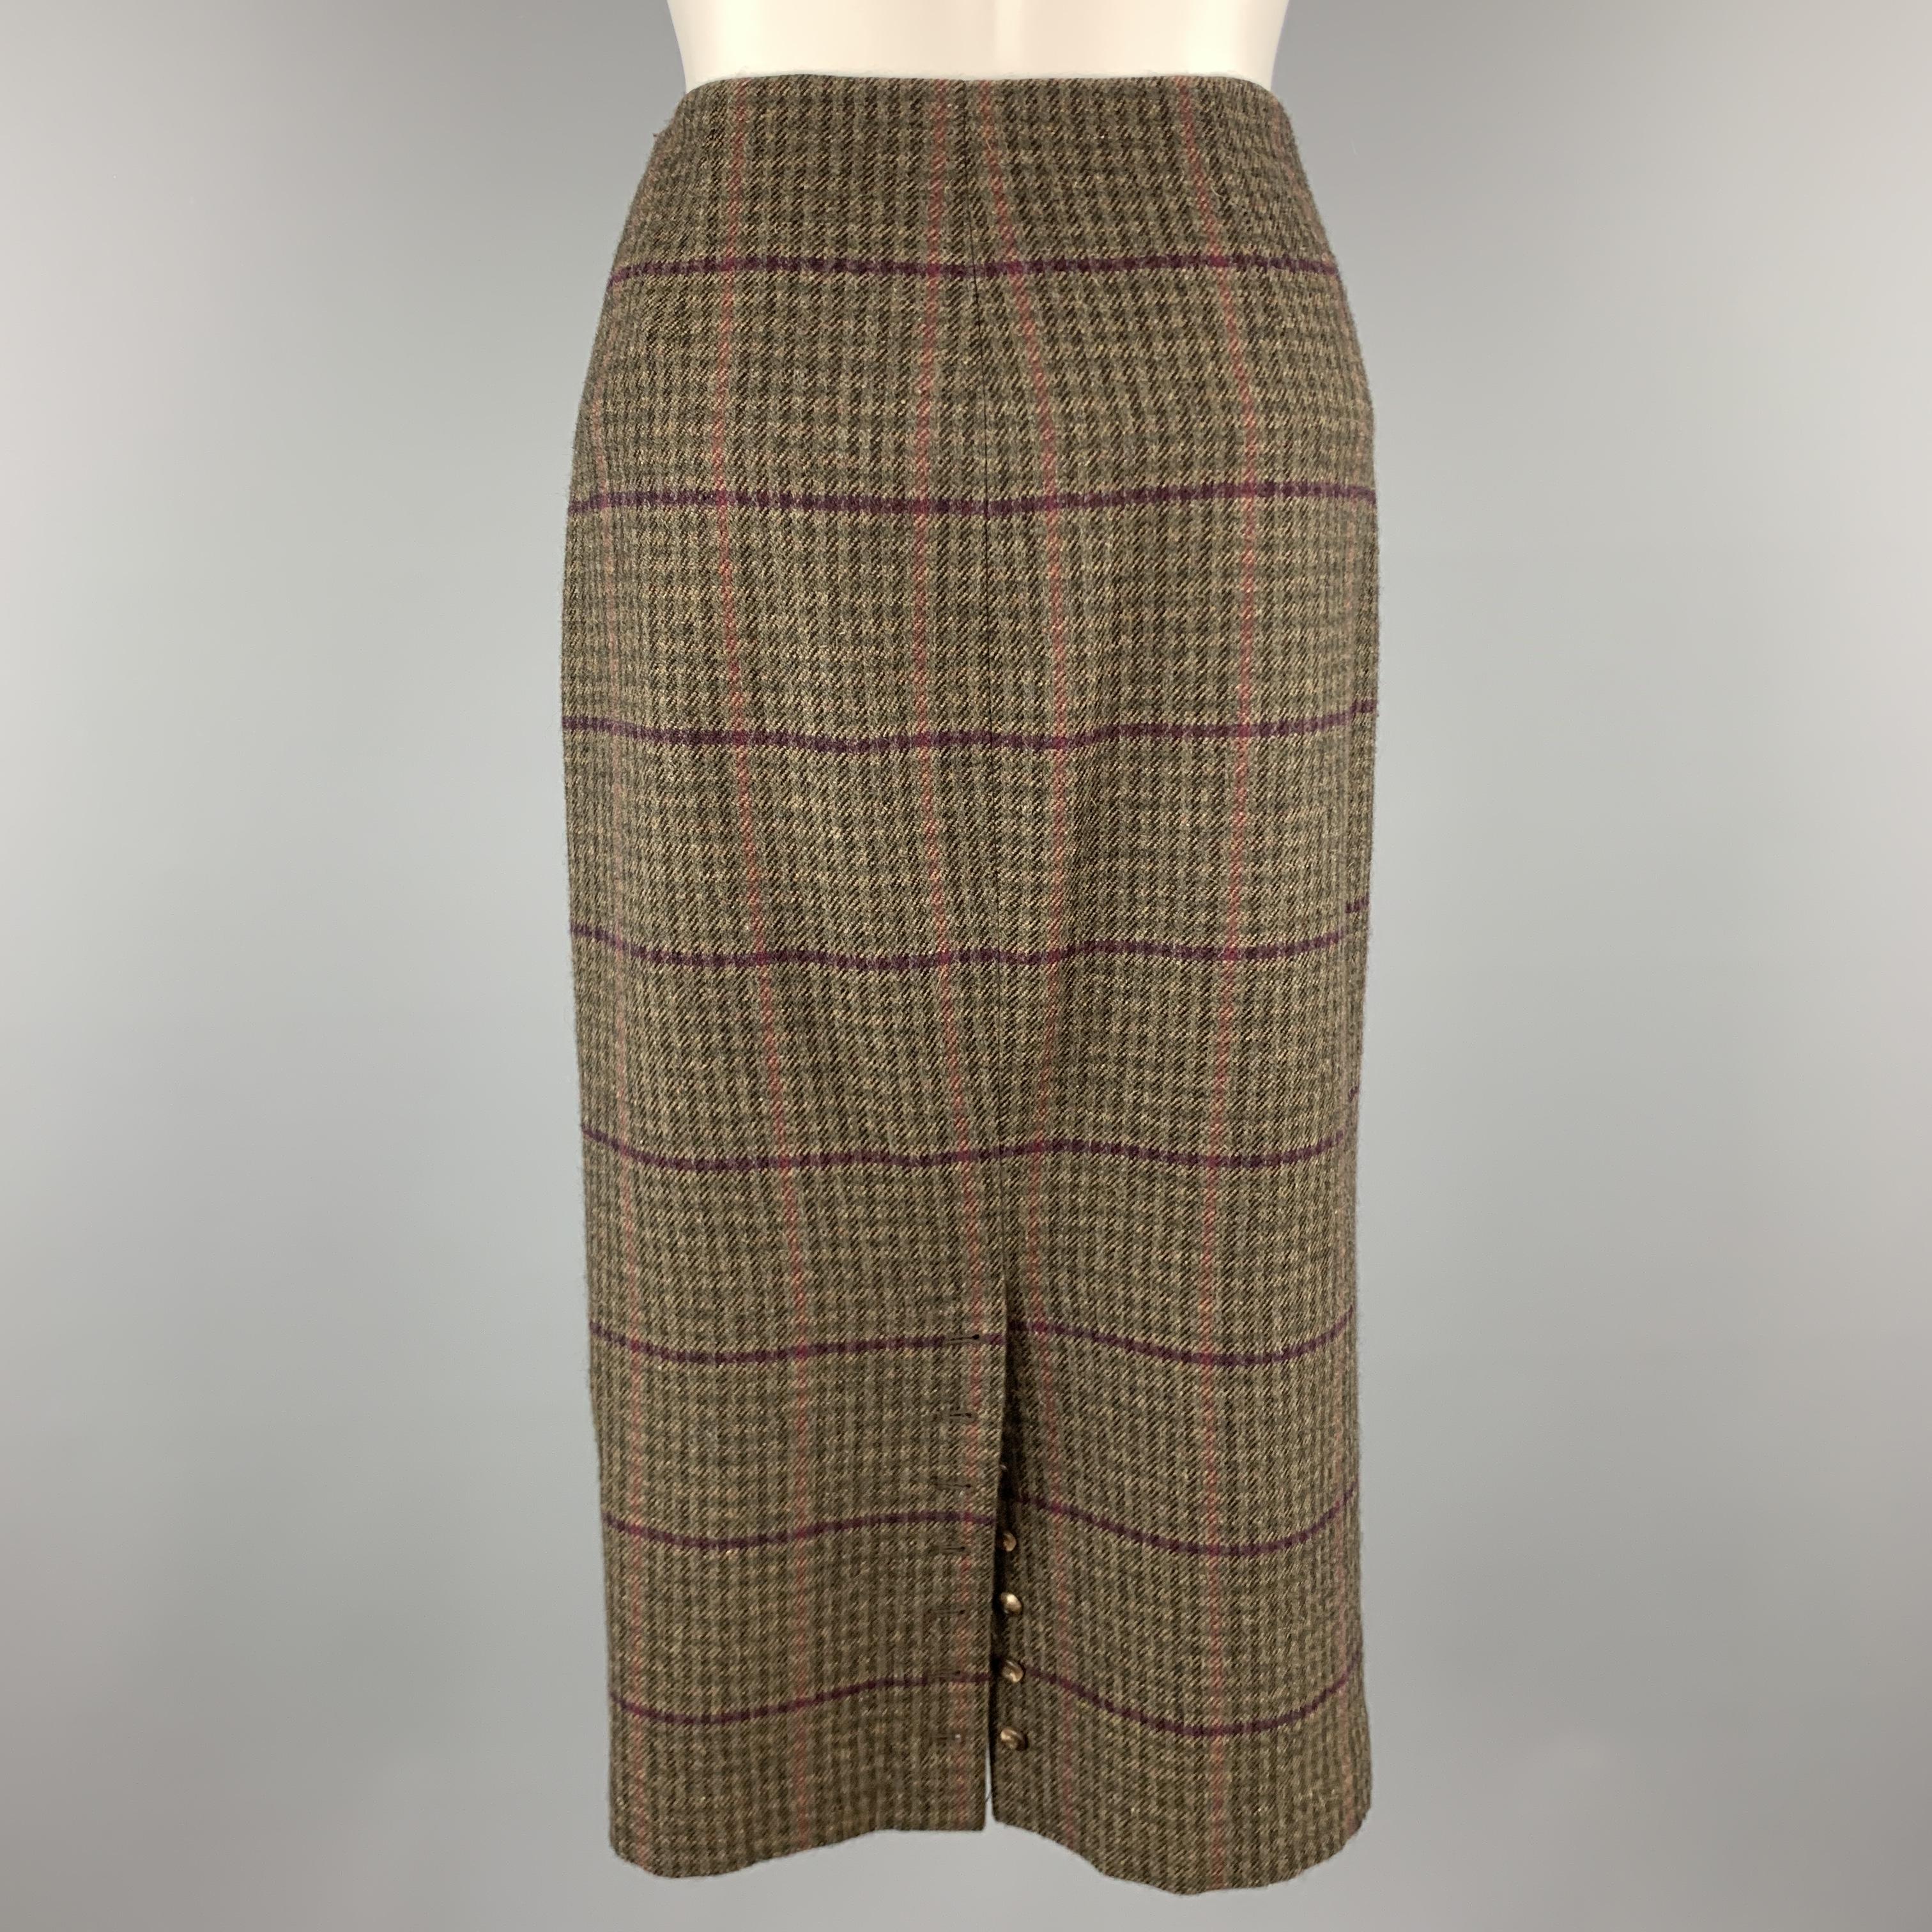 size 4 pencil skirt